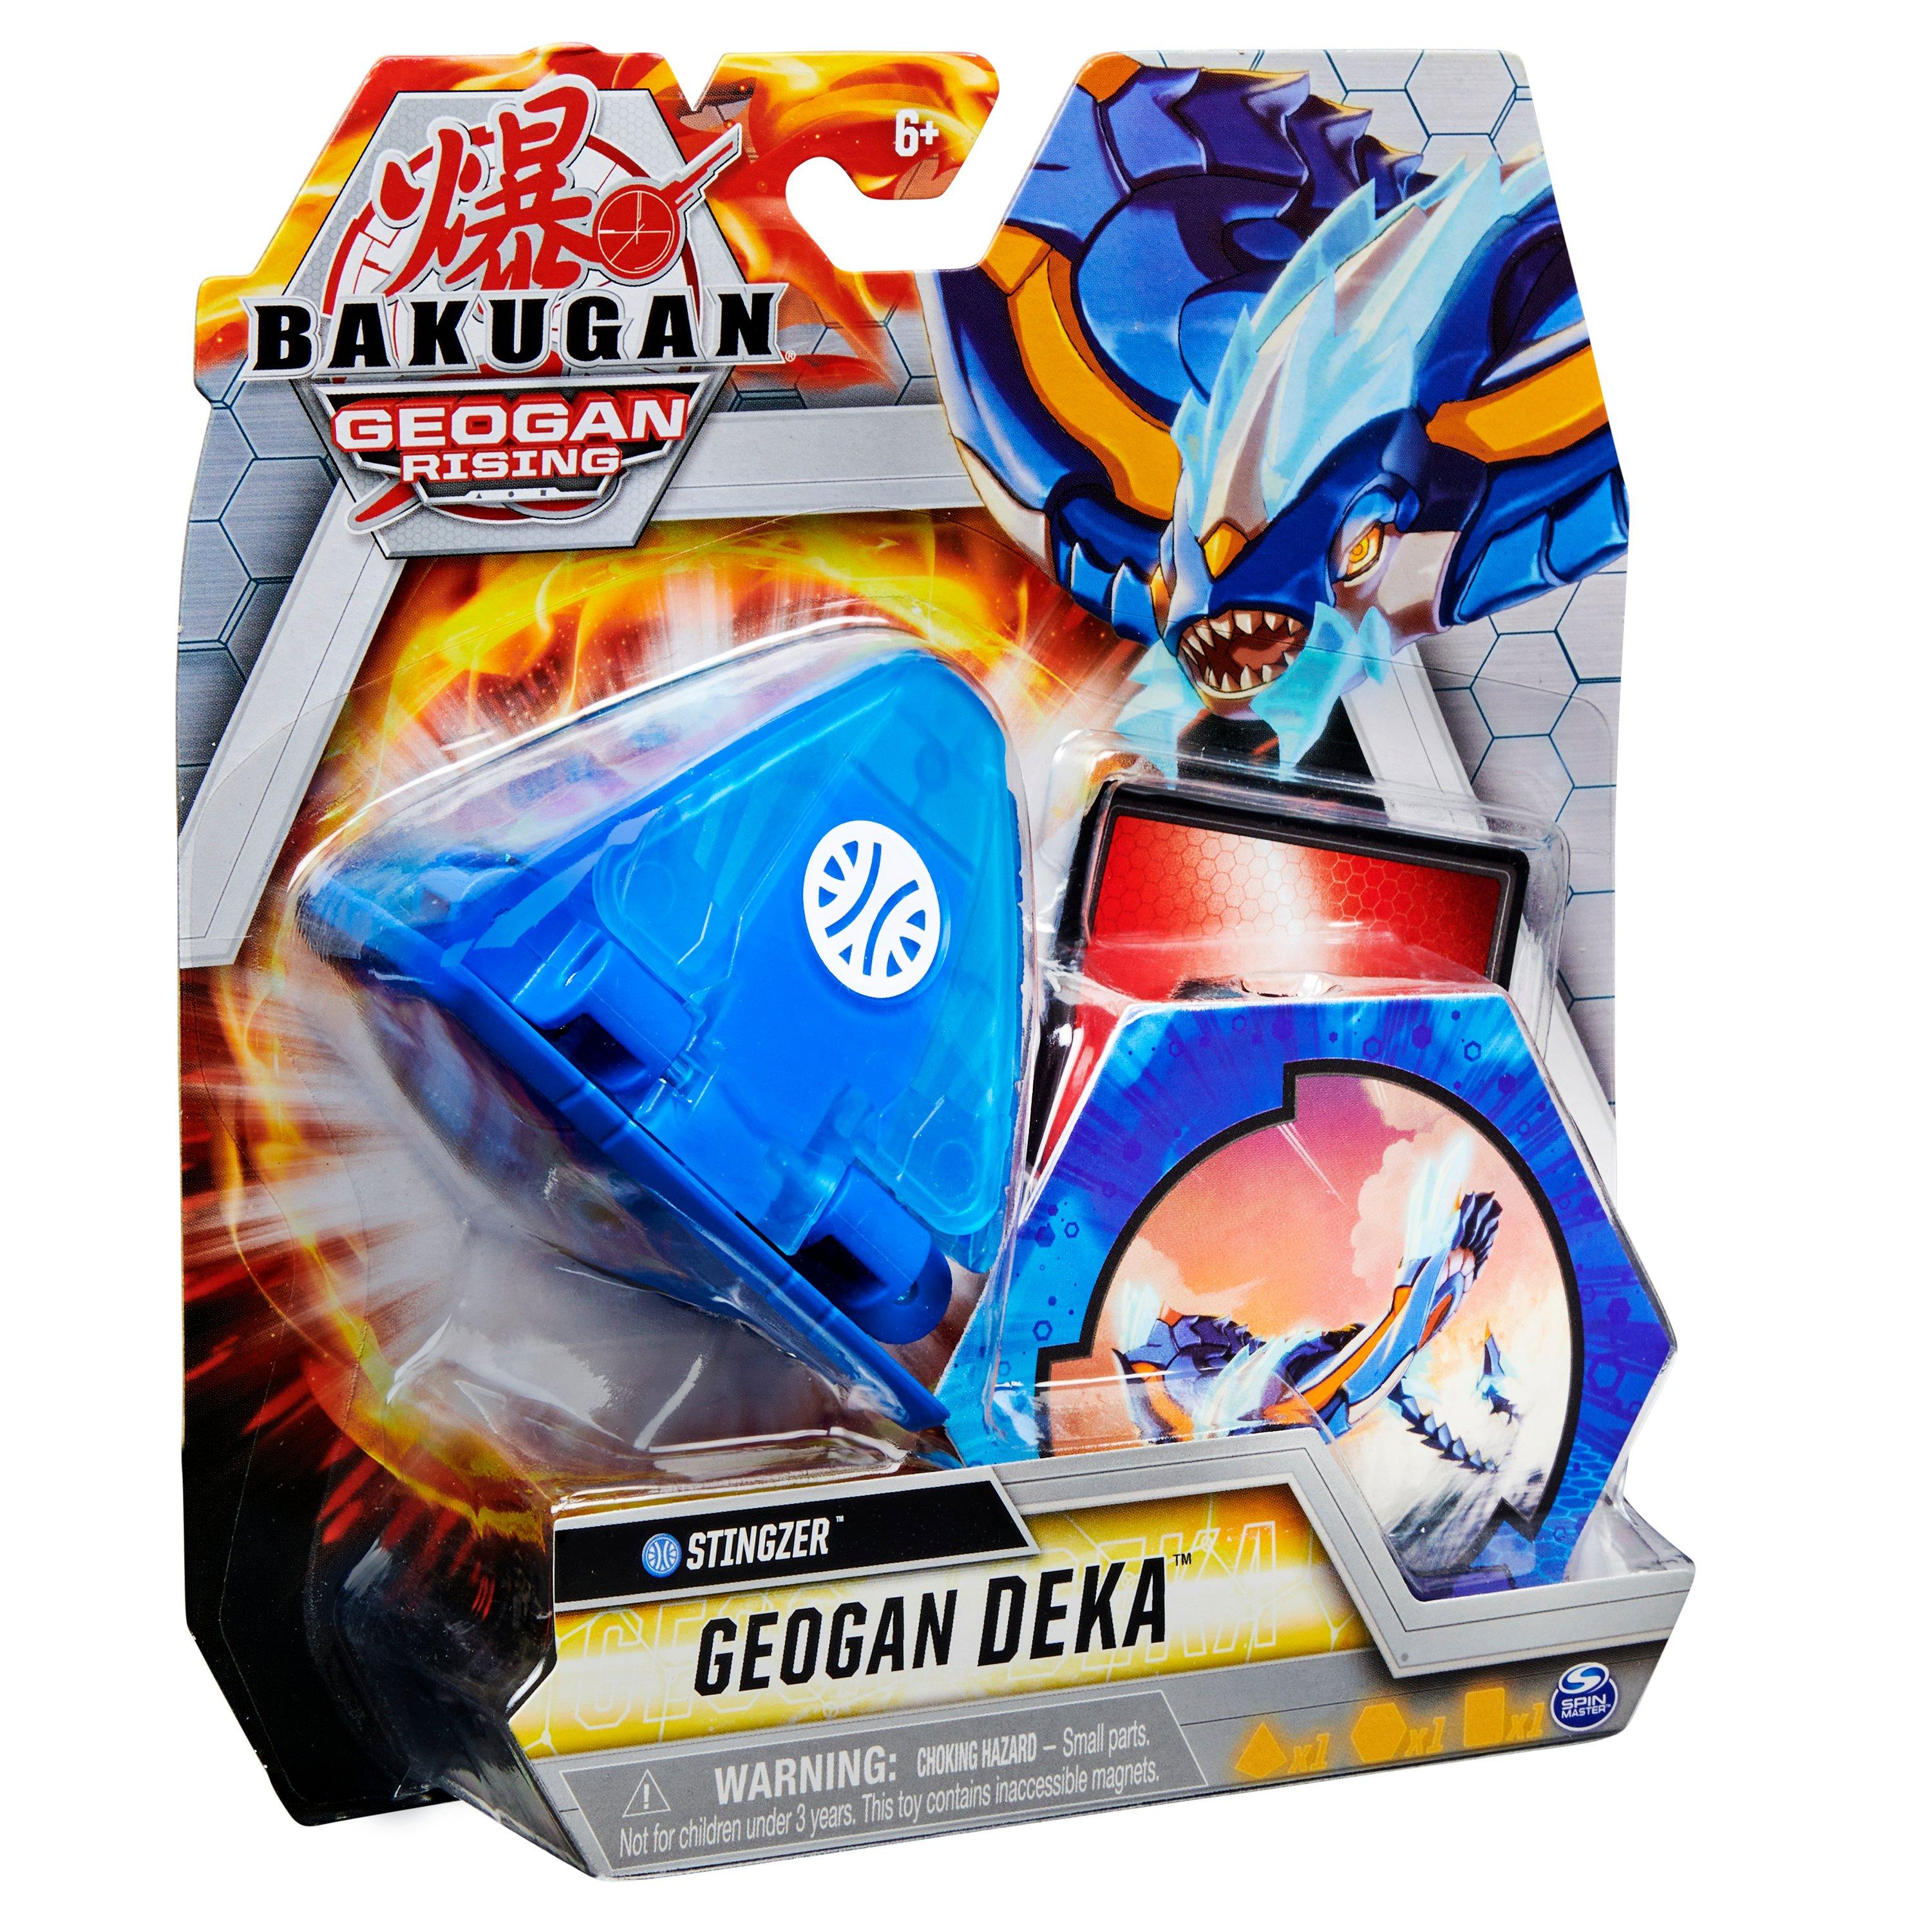 Bakugan Geogan Rising Geogan Deka Series 3 (Assortment)